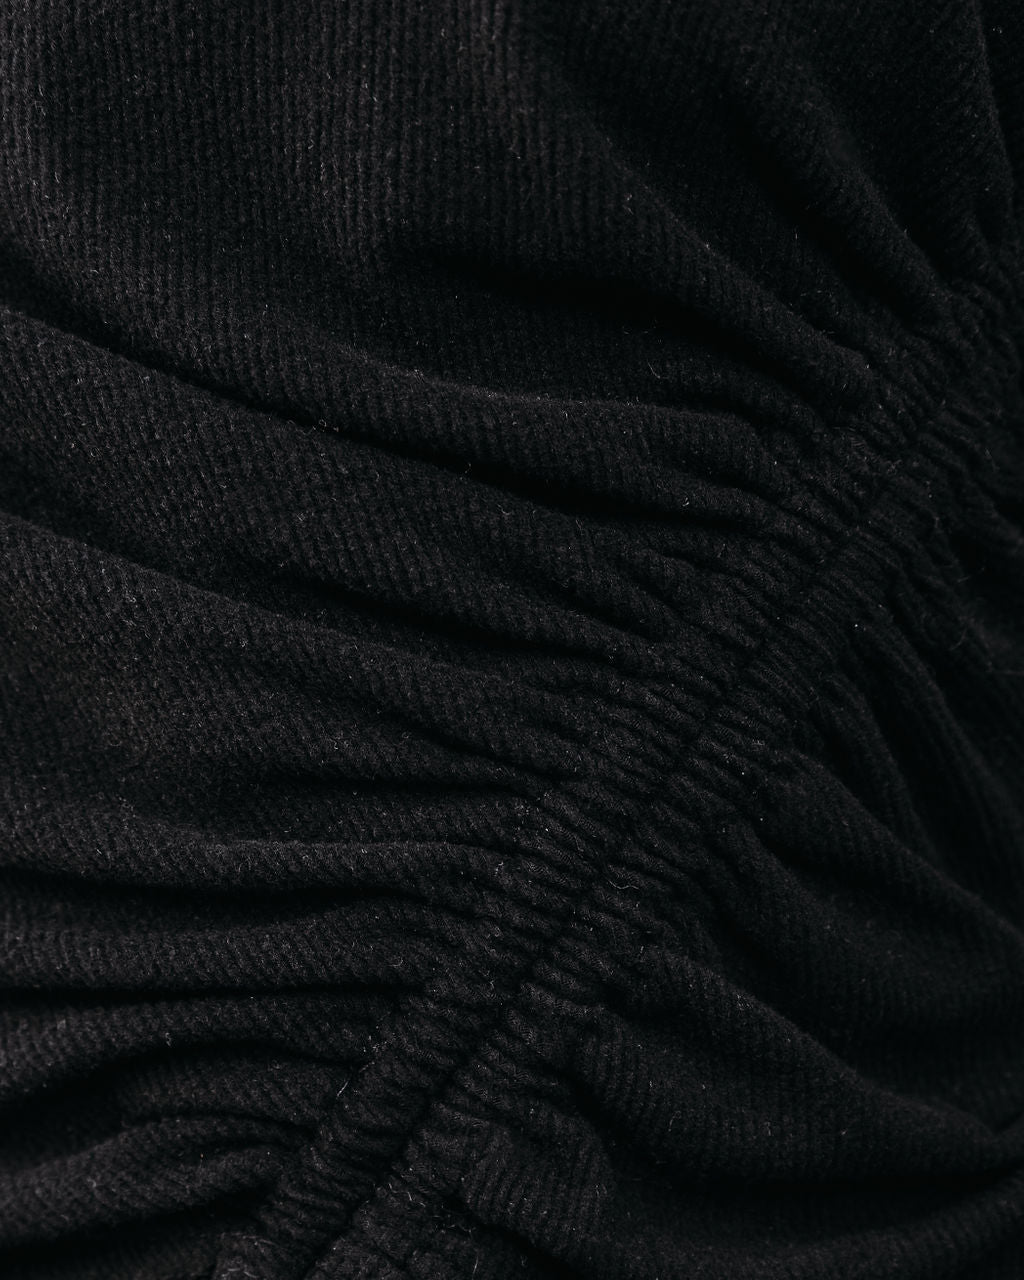 Mira Asymmetrical Ruched Long Sleeve Knit Top - Black